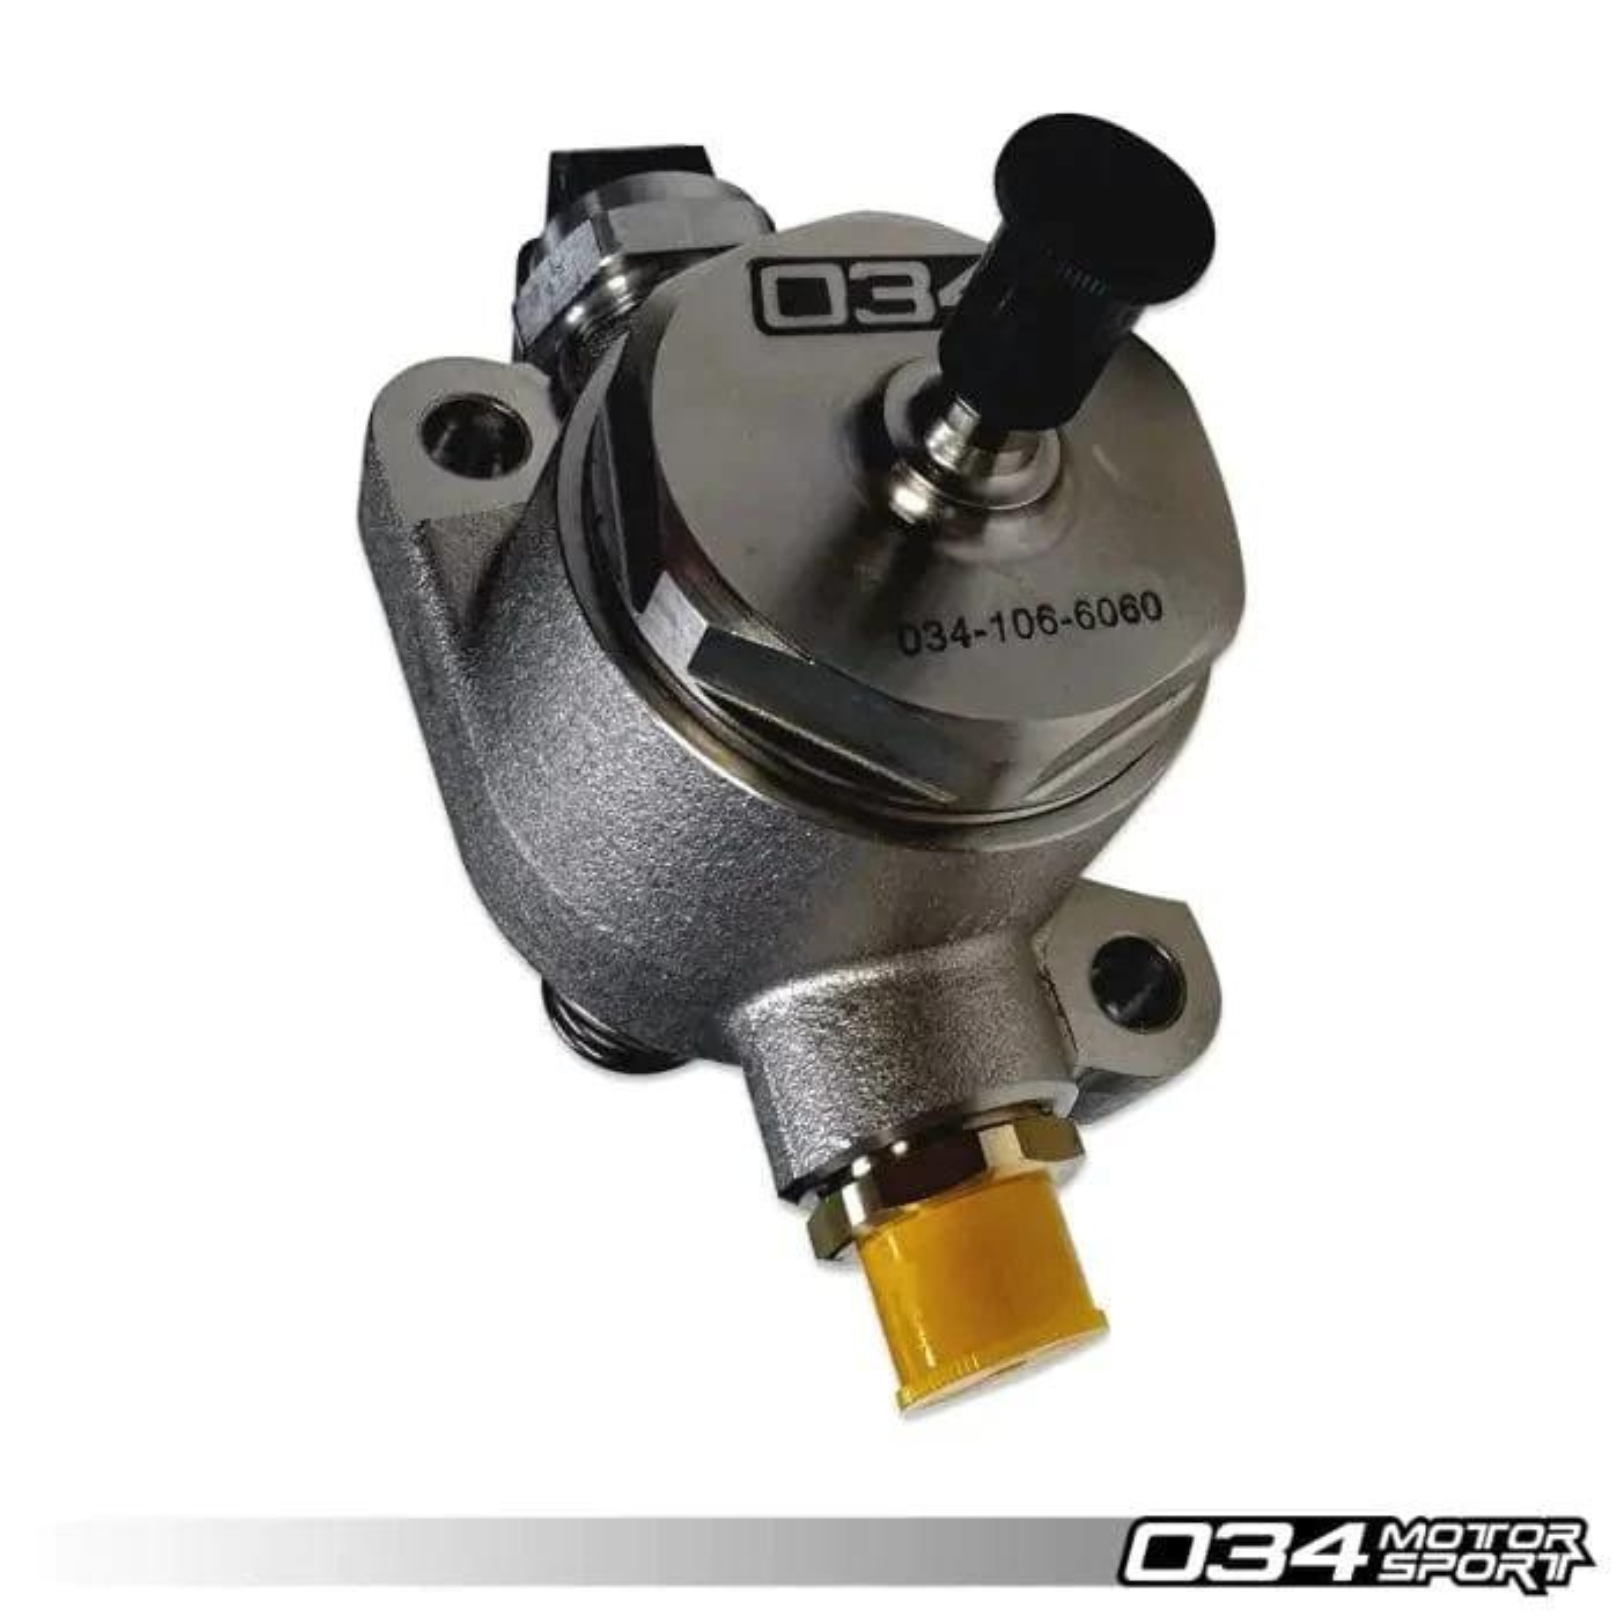 034 Motorsport - High Pressure Fuel Pump Upgrade (Whole Unit) - VW MK7 & 7.5 Golf - 034-106-6060